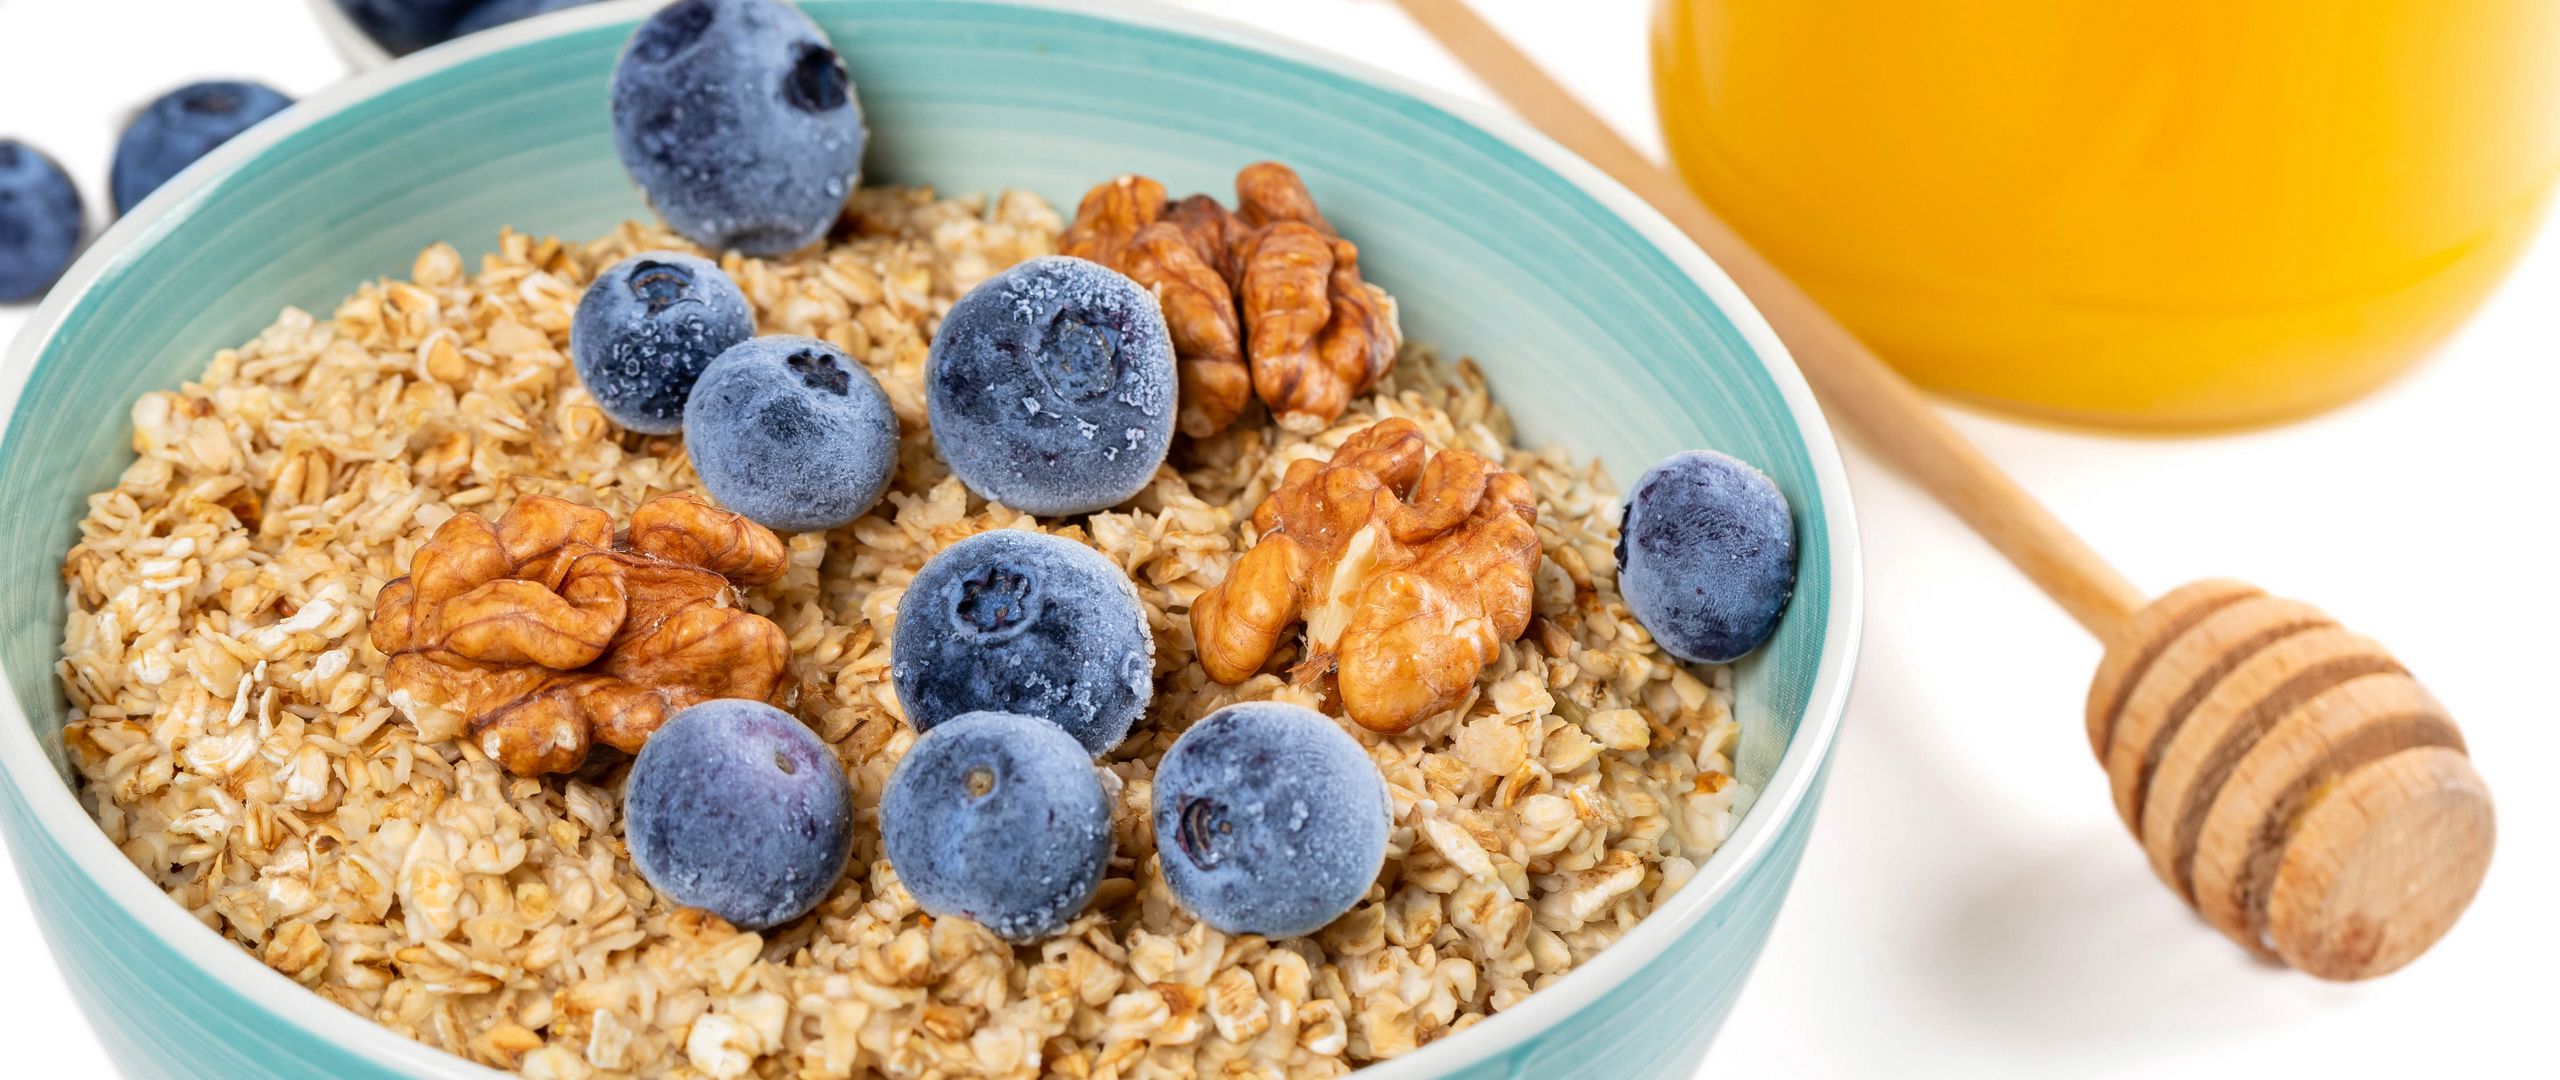 Download wallpaper 2560x1080 oatmeal, berries, nuts, bowl, breakfast ...